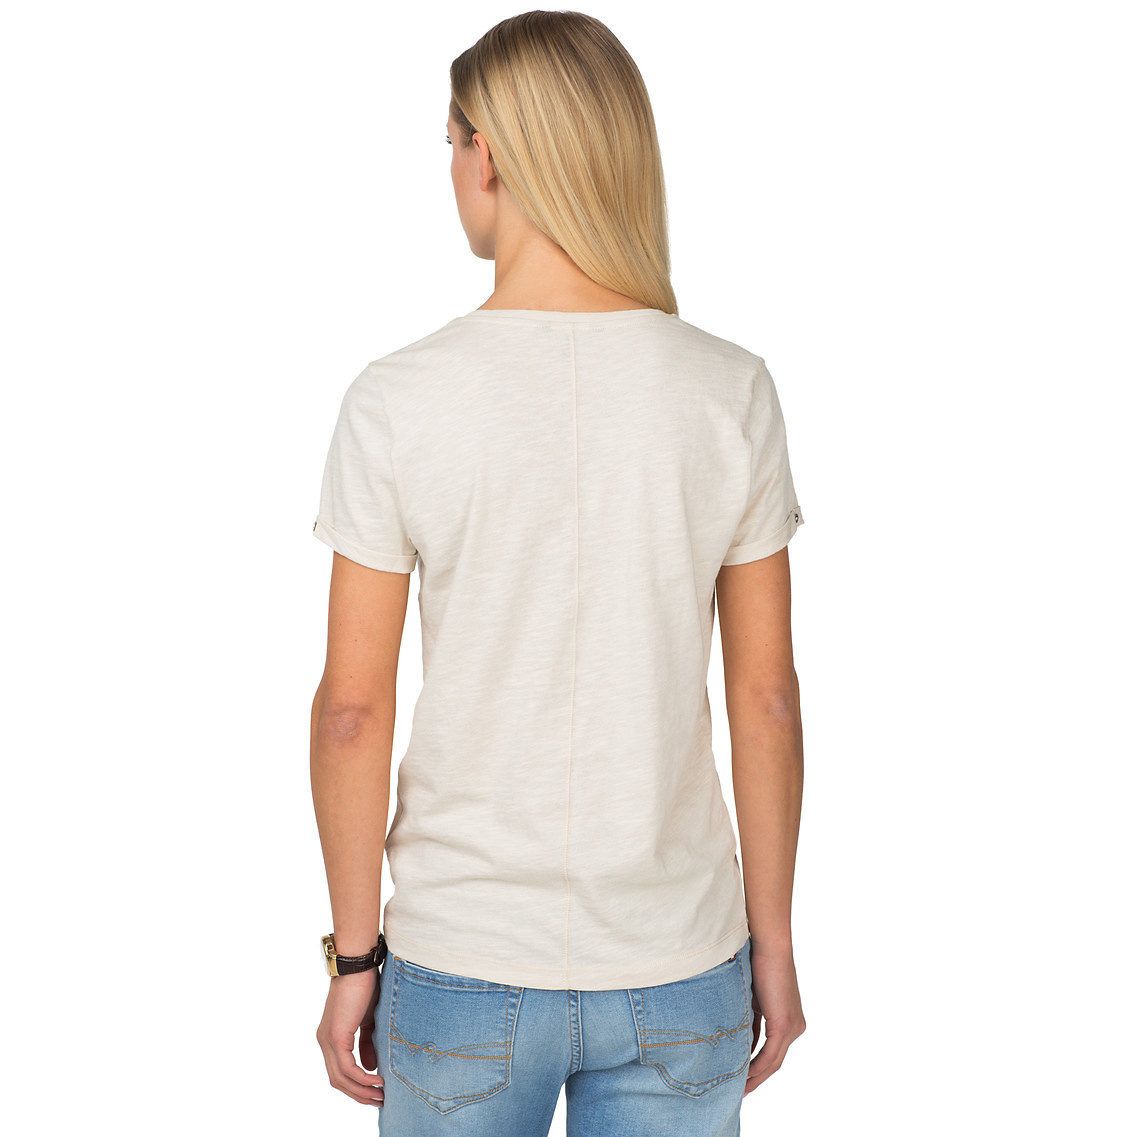 Tommy Hilfiger női fehér pamut T-shirt 2015.03.01 #80619 fotója